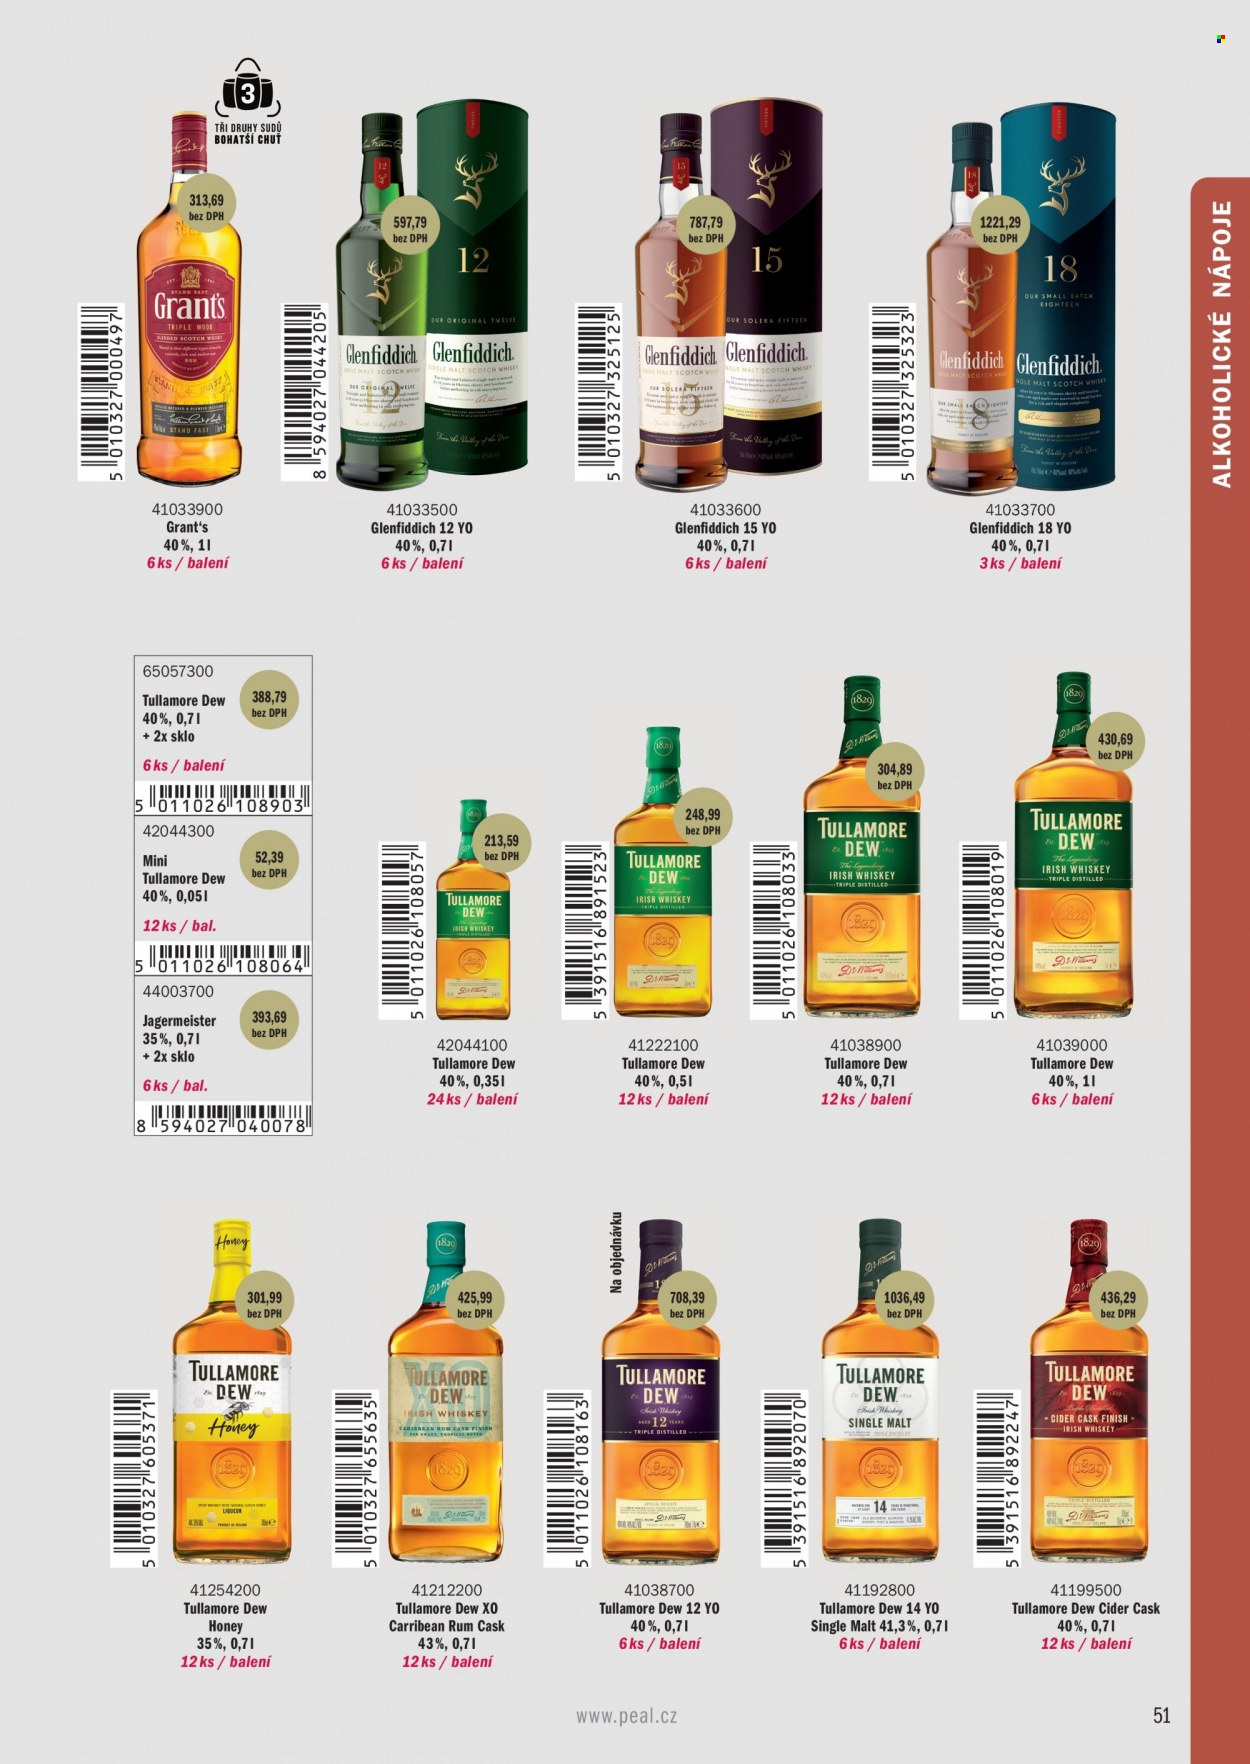 thumbnail - Leták PEAL - Produkty v akci - alkohol, rum, cider, Jägermeister, whisky, Tullamore Dew, bylinný likér, Grant‘s, Glenfiddich. Strana 9.